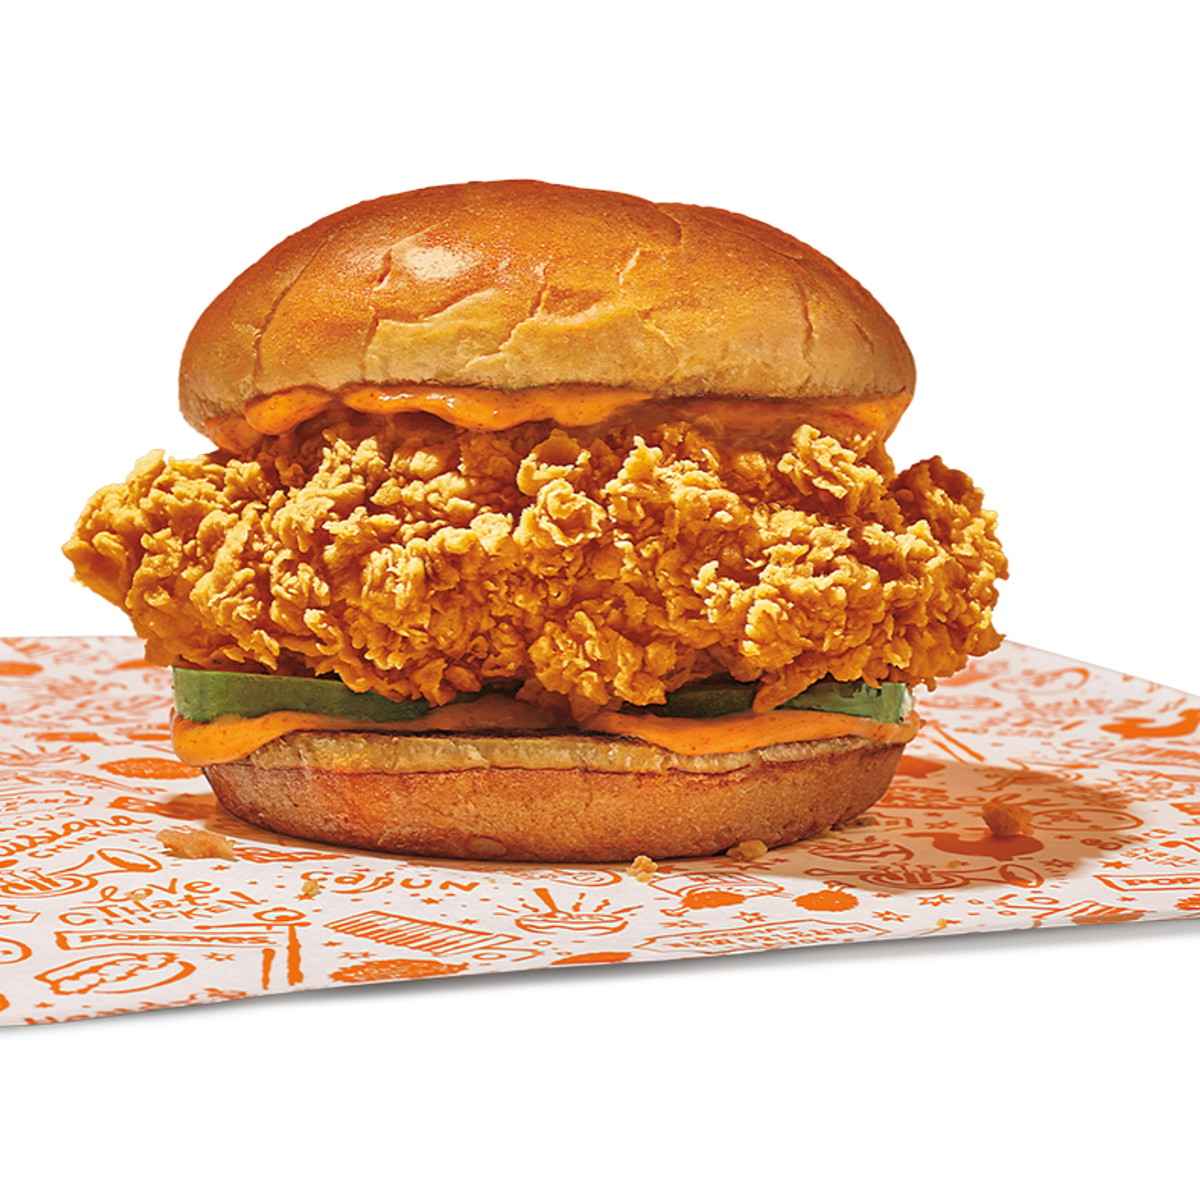 Popeyes chicken sandwich brings Louisiana to Chennai - The Hindu